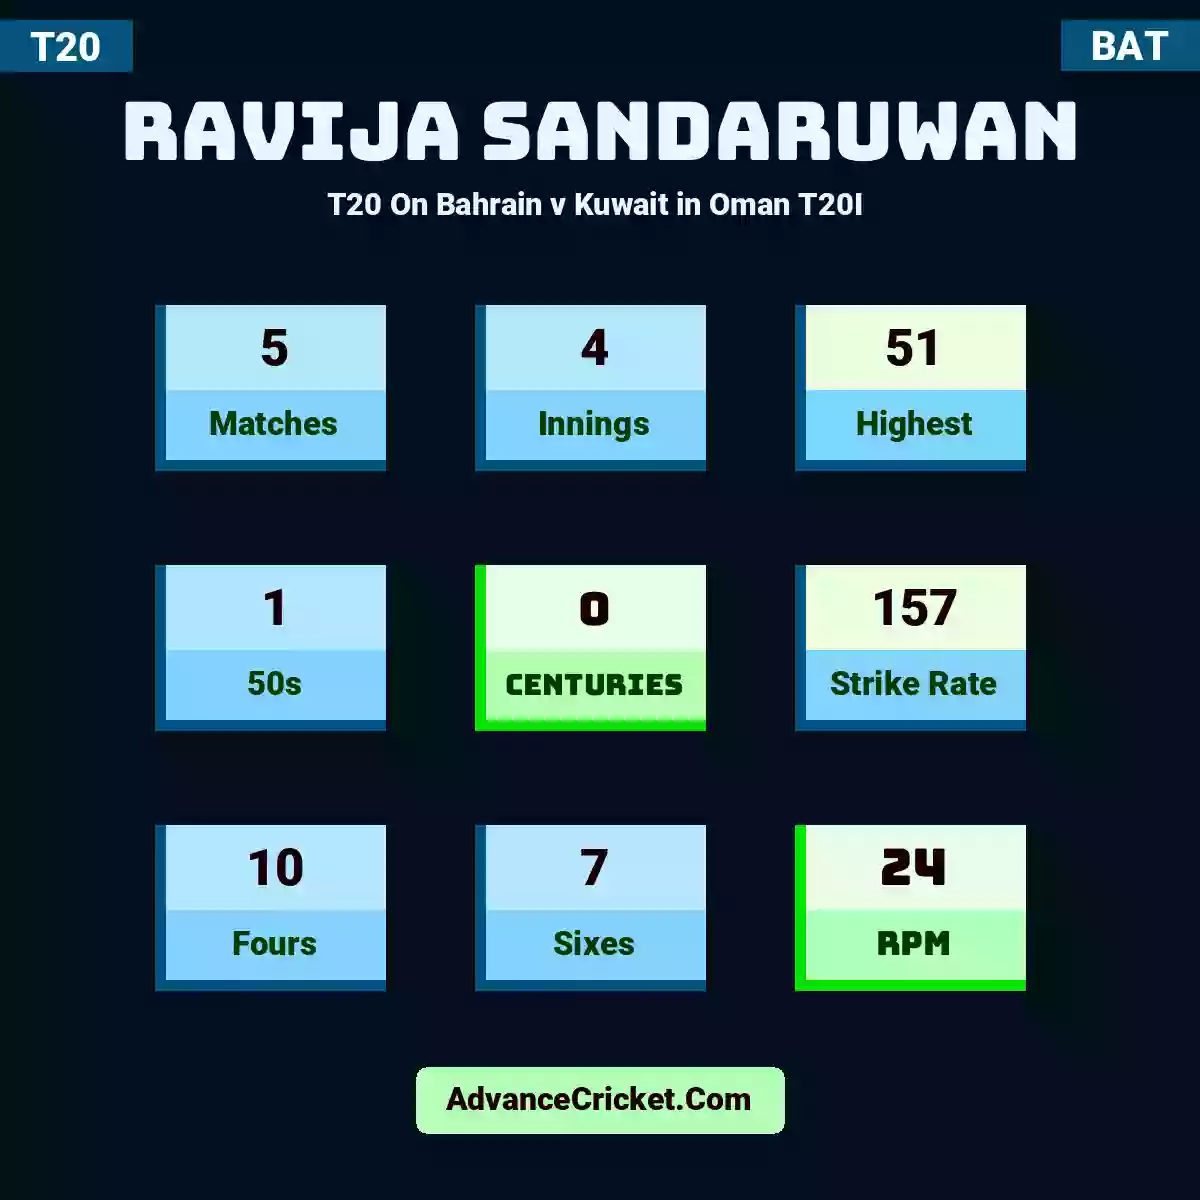 Ravija Sandaruwan T20  On Bahrain v Kuwait in Oman T20I , Ravija Sandaruwan played 5 matches, scored 51 runs as highest, 1 half-centuries, and 0 centuries, with a strike rate of 157. R.Sandaruwan hit 10 fours and 7 sixes, with an RPM of 24.